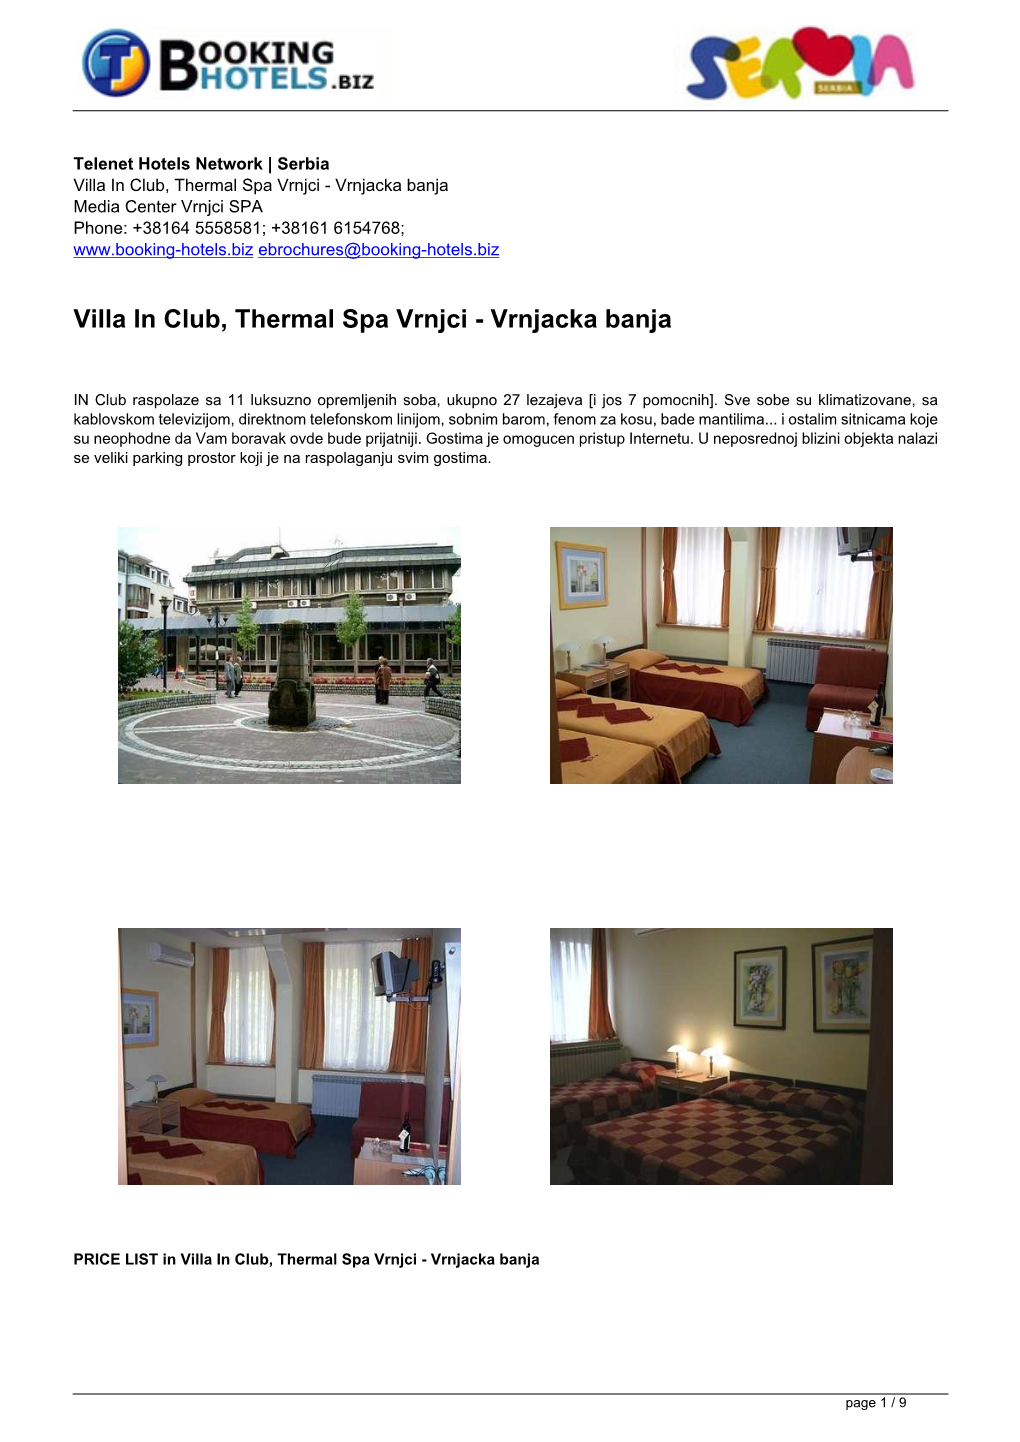 En Ebrochures 1943 | Villa in Club, Thermal Spa Vrnjci